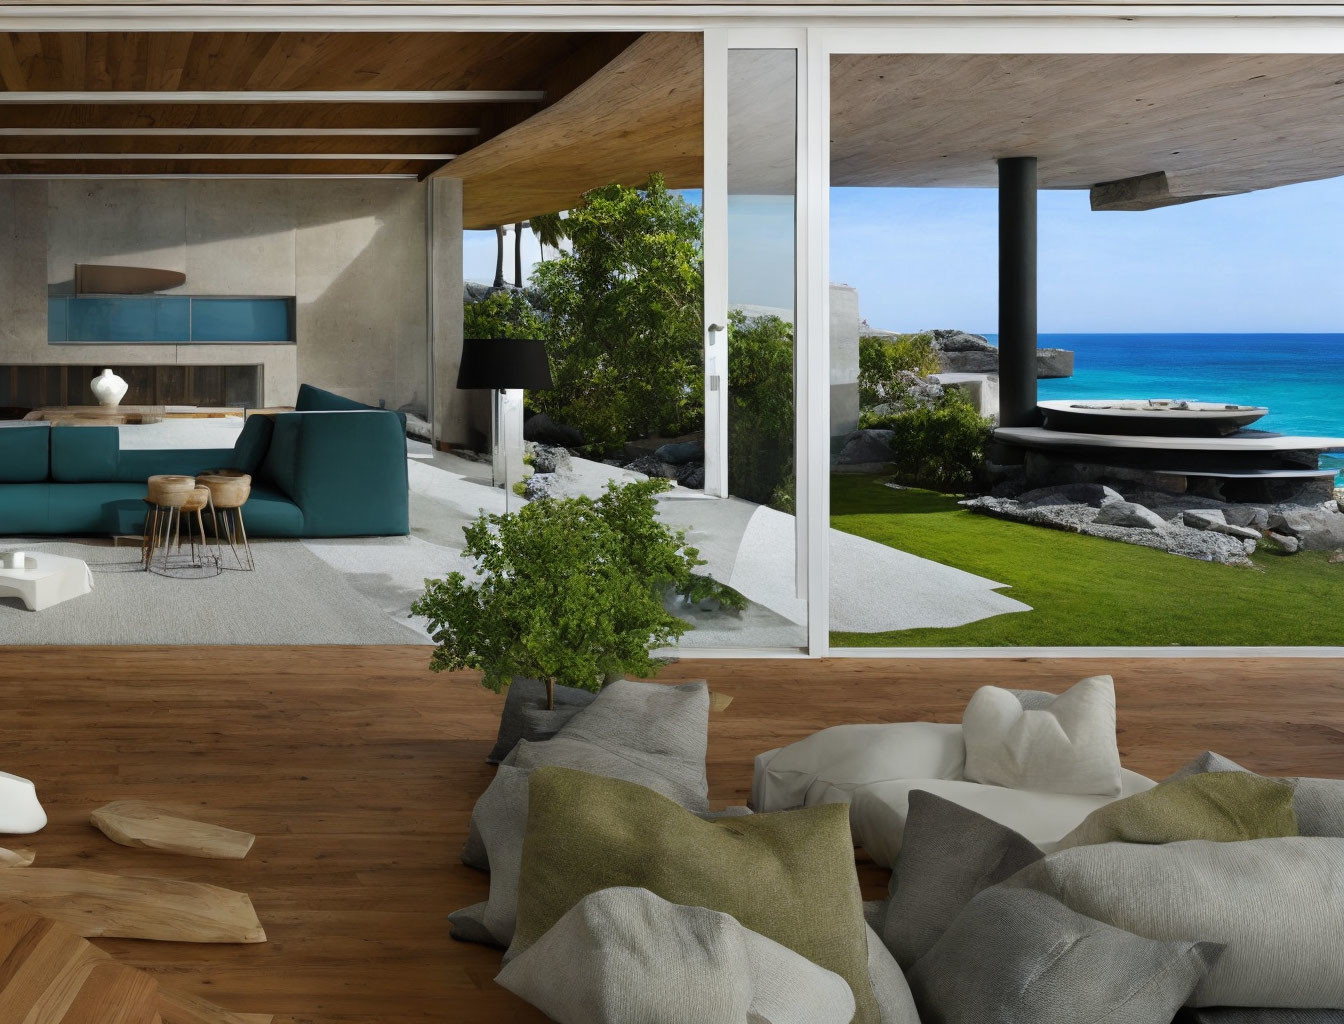 Spacious open-concept living area with ocean view patio